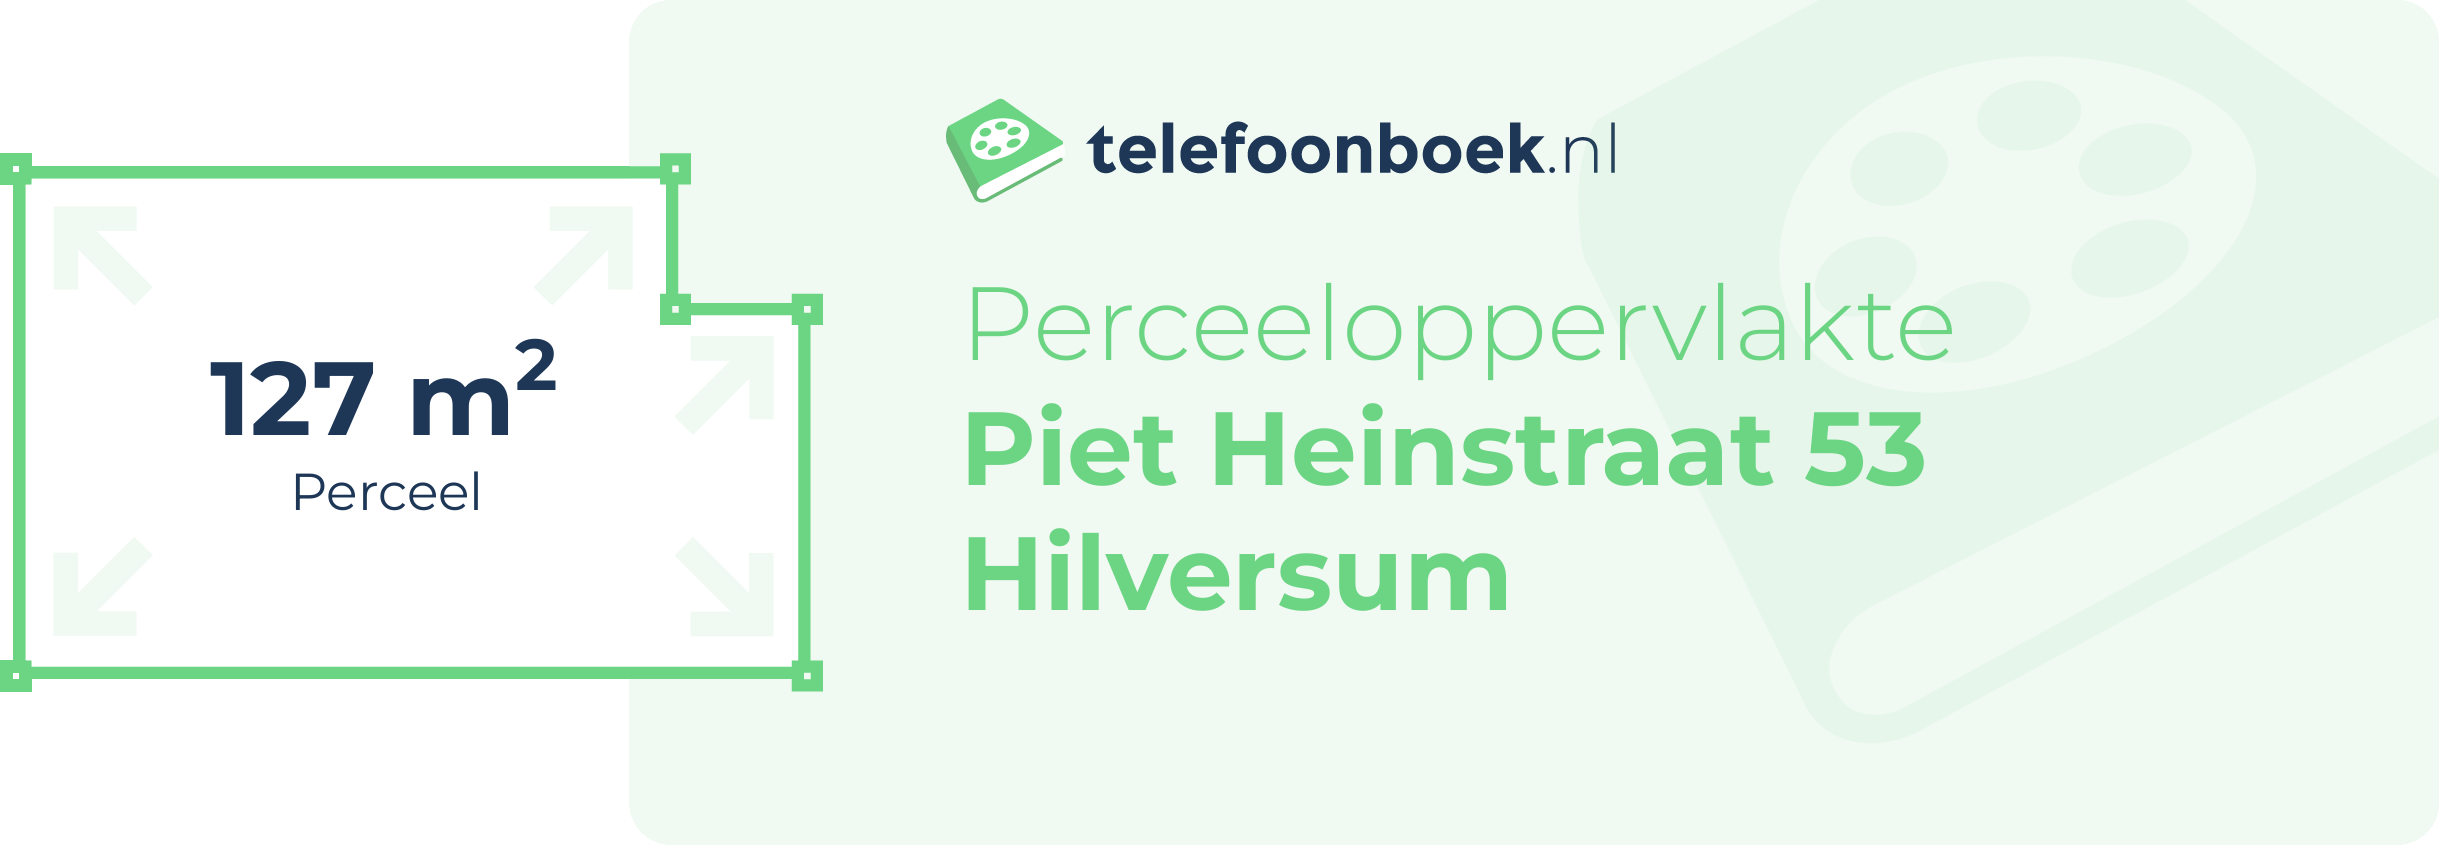 Perceeloppervlakte Piet Heinstraat 53 Hilversum